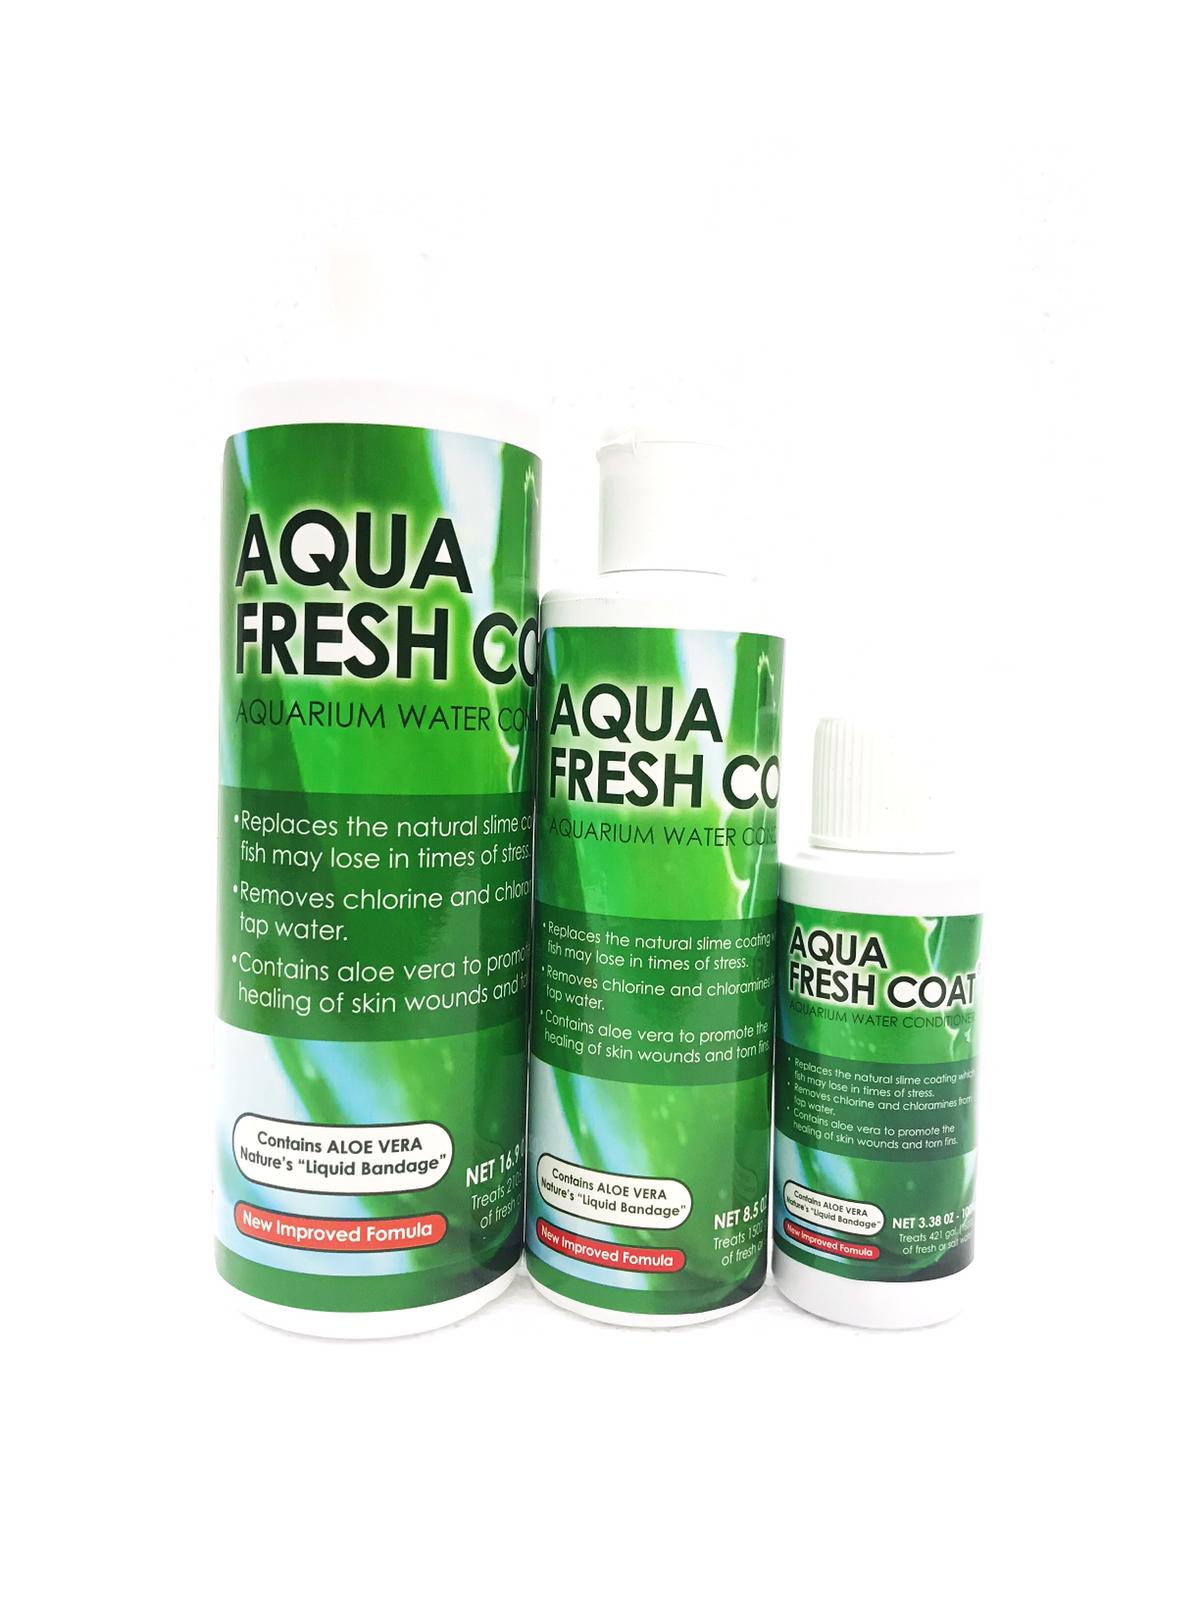 Ocean Free Aqua Fresh Coat for New Aquarium Tank to Remove Chlorine and Chloramine - PetzLifeWorld